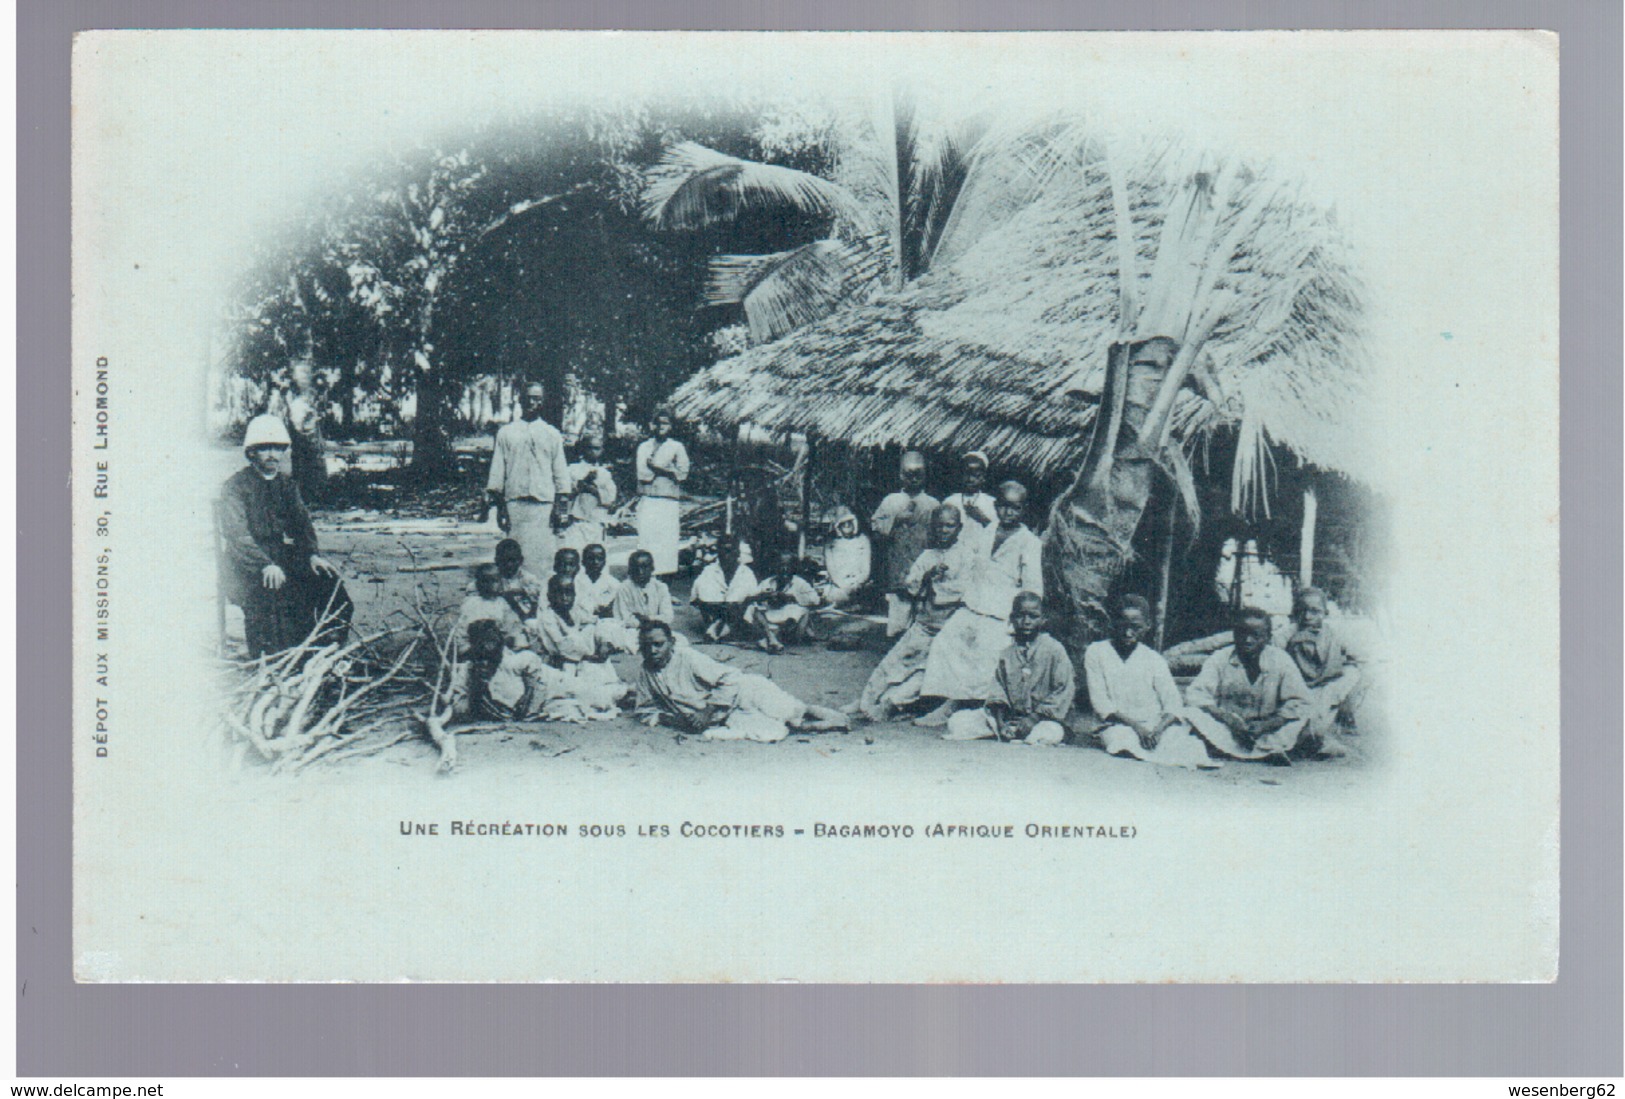 TANZANIA Une Recreation Sous Les Cocotiers Bagamoyo (Afrique Orientale) Ca 1900  OLD POSTCARD - Tanzania